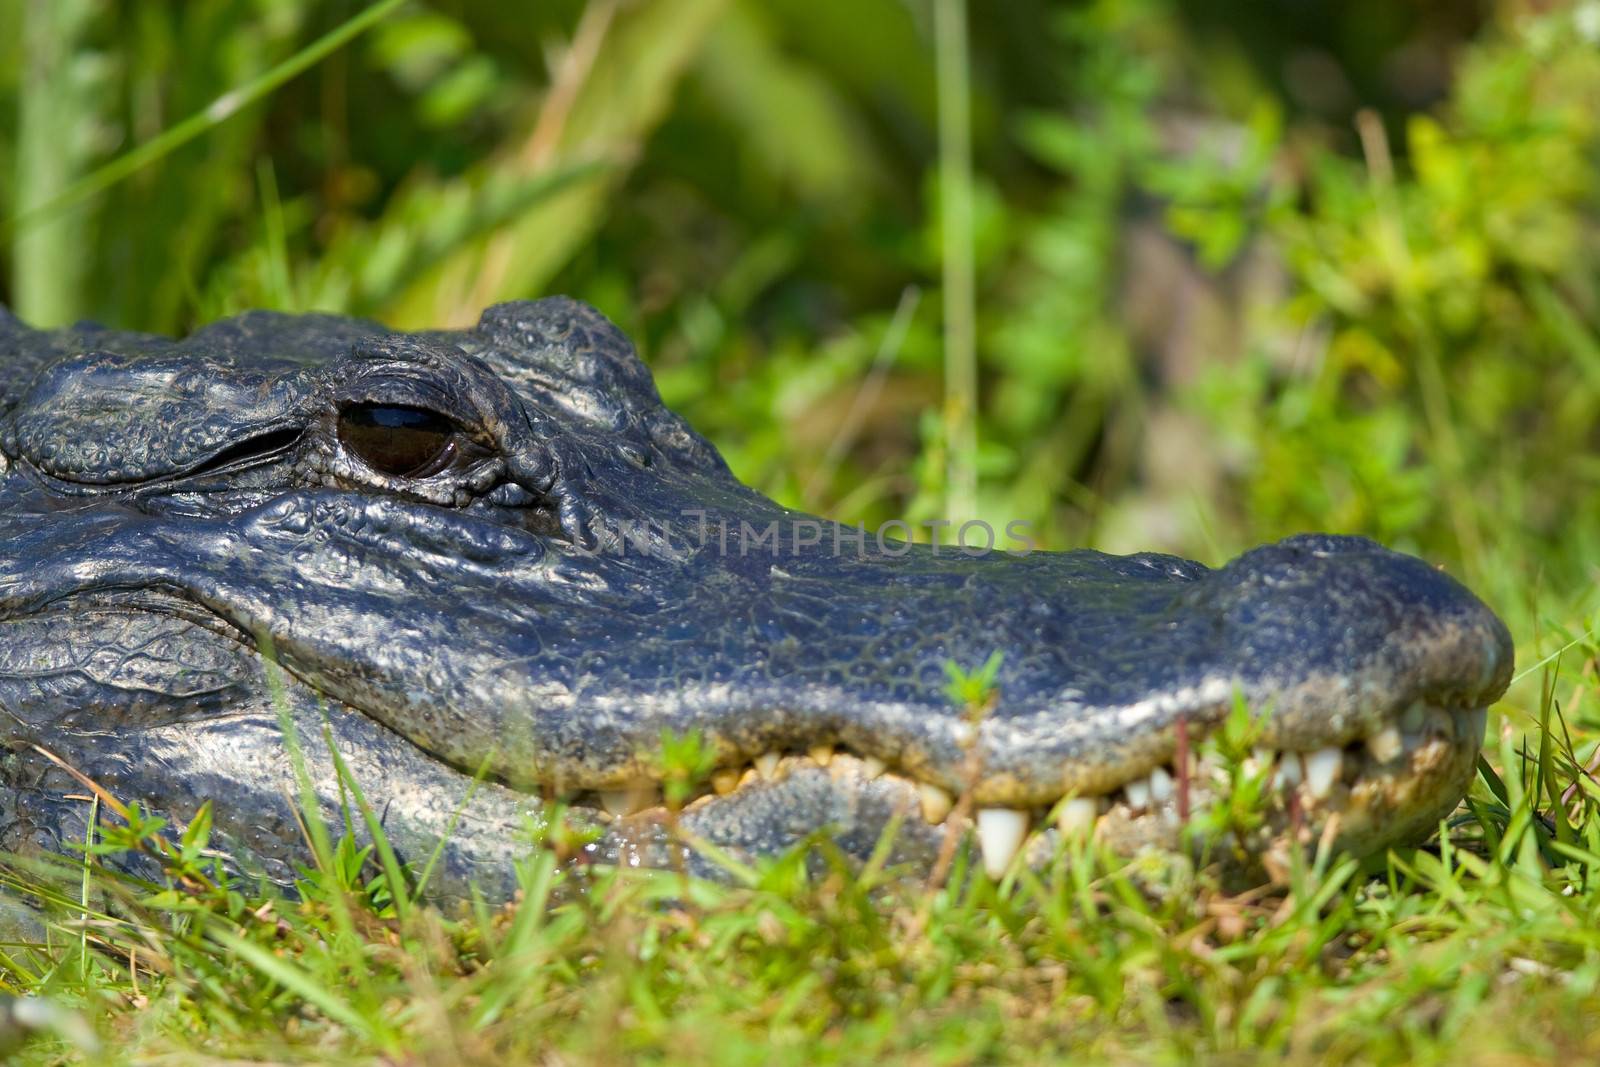 Close-up of eye of an alligator, Everglades National Park, Florida, USA